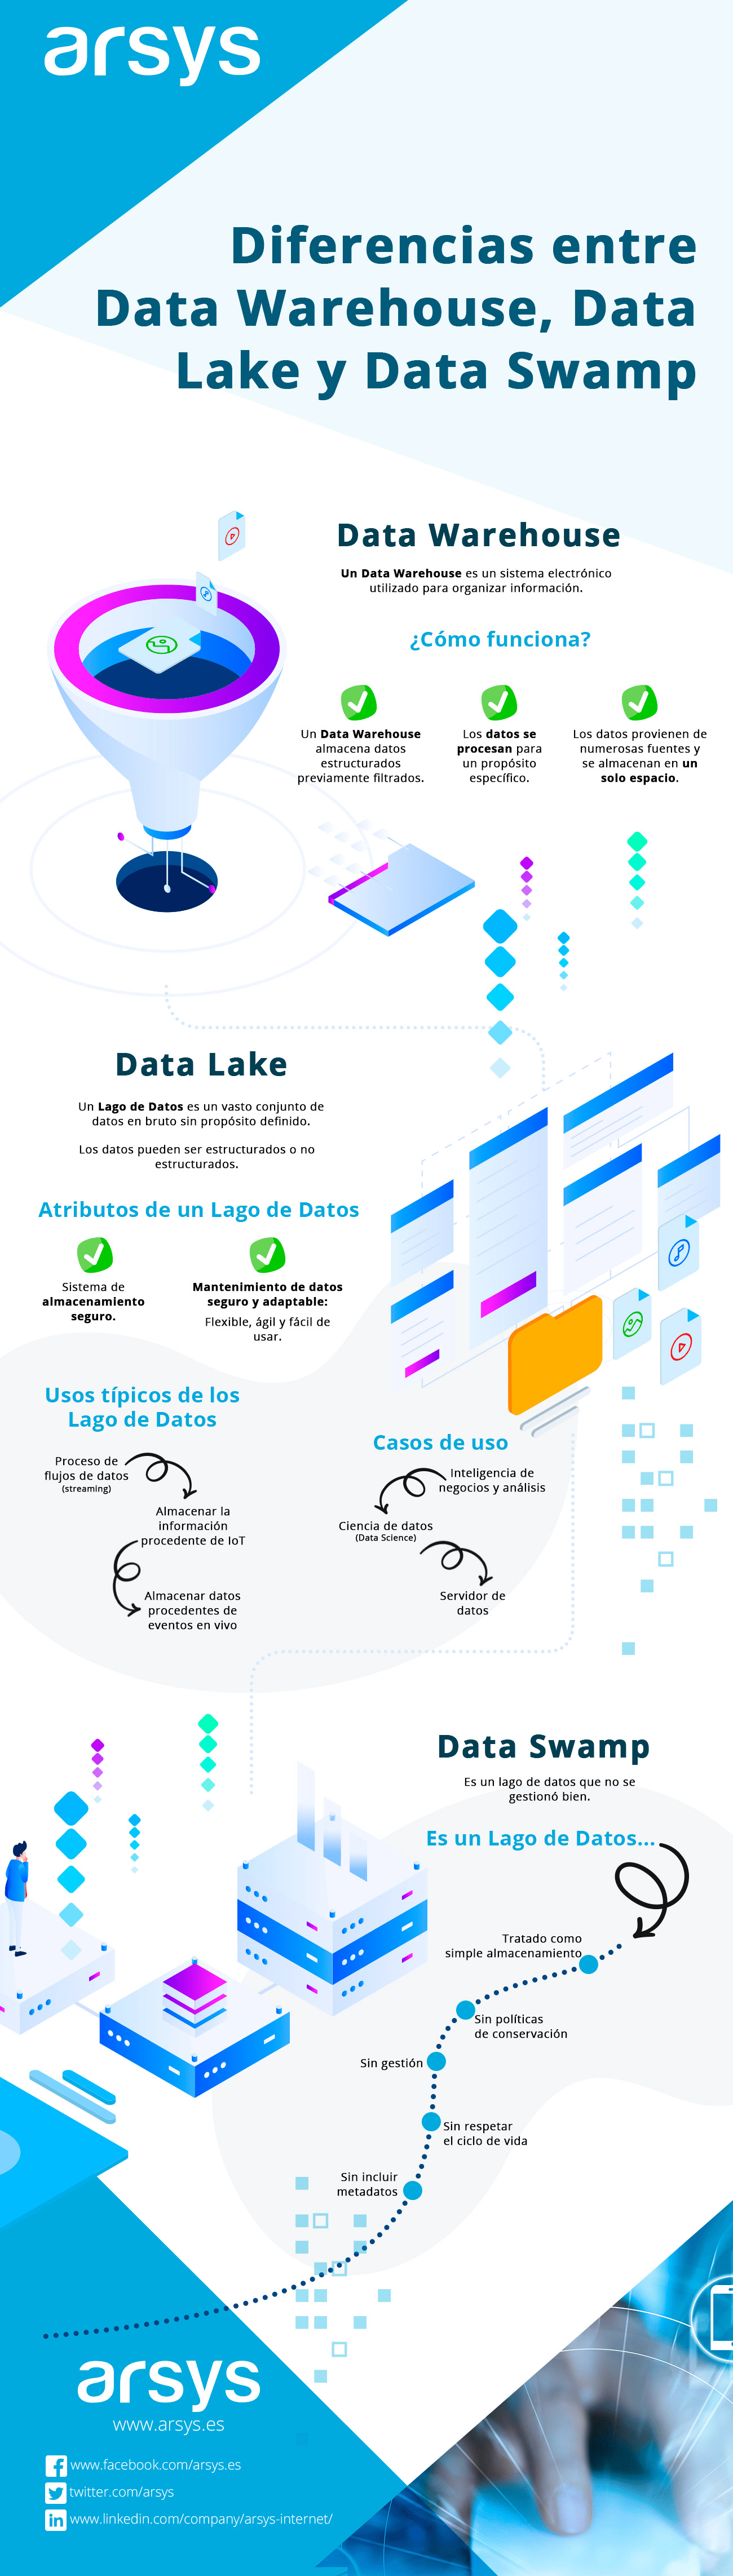 Diferencias entre data Warehouse, Data Lake y Data Swamp